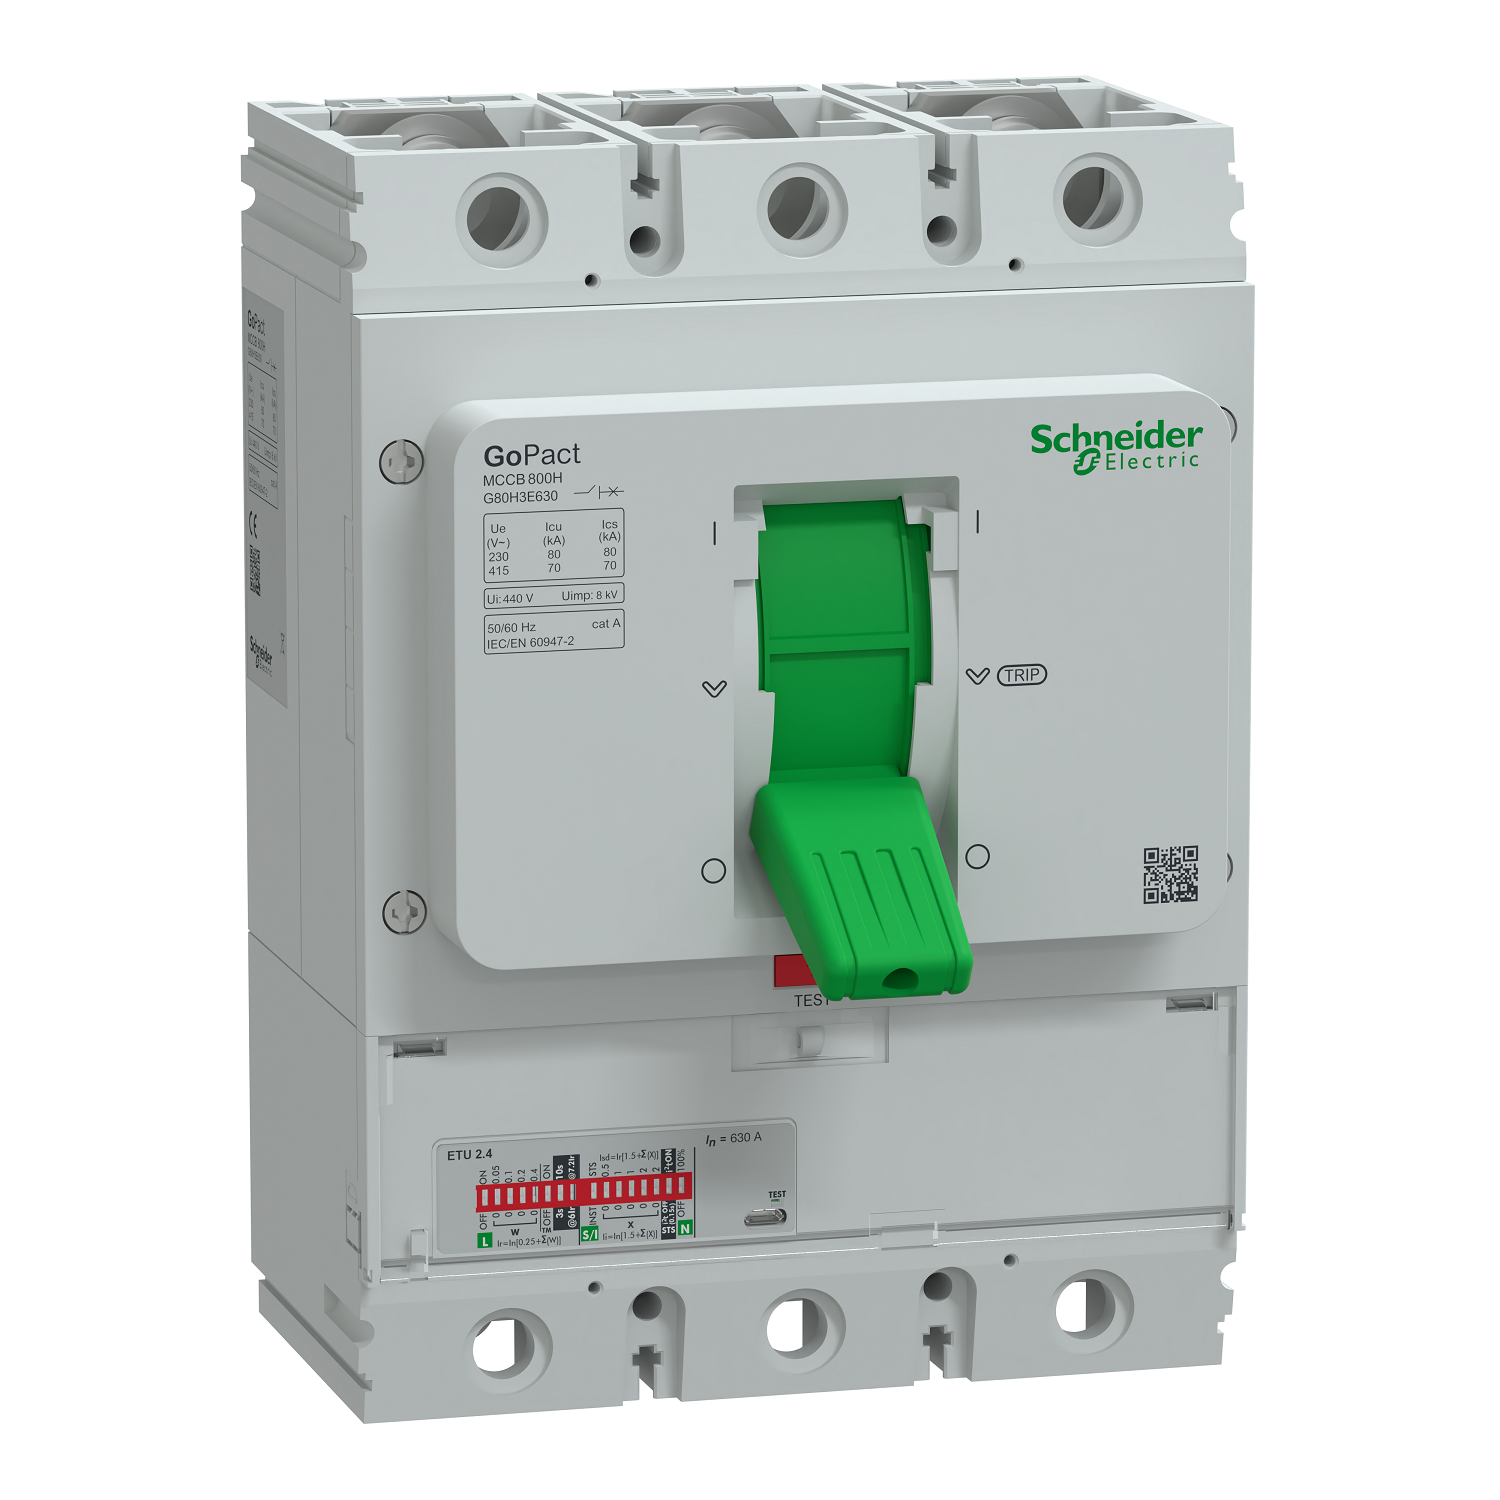 Circuit breaker, GoPact MCCB 800, 3 poles, 70kA at 415VAC, 630A rating, ETU trip unit, adjustable thermal protection